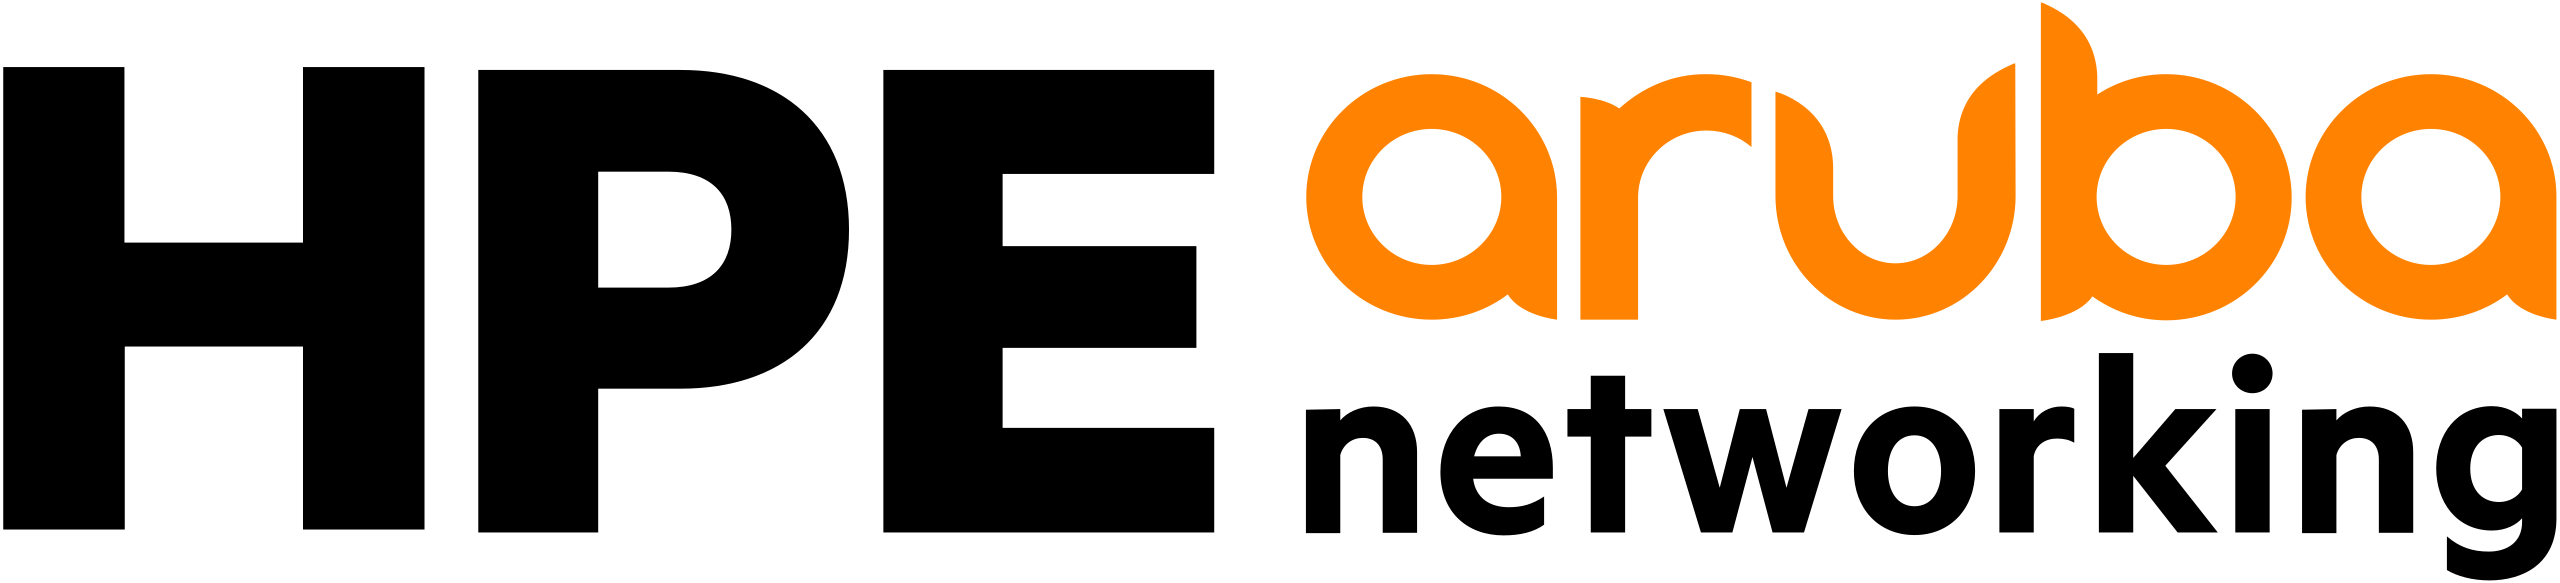 Hpe-aruba-networking-logo.svg